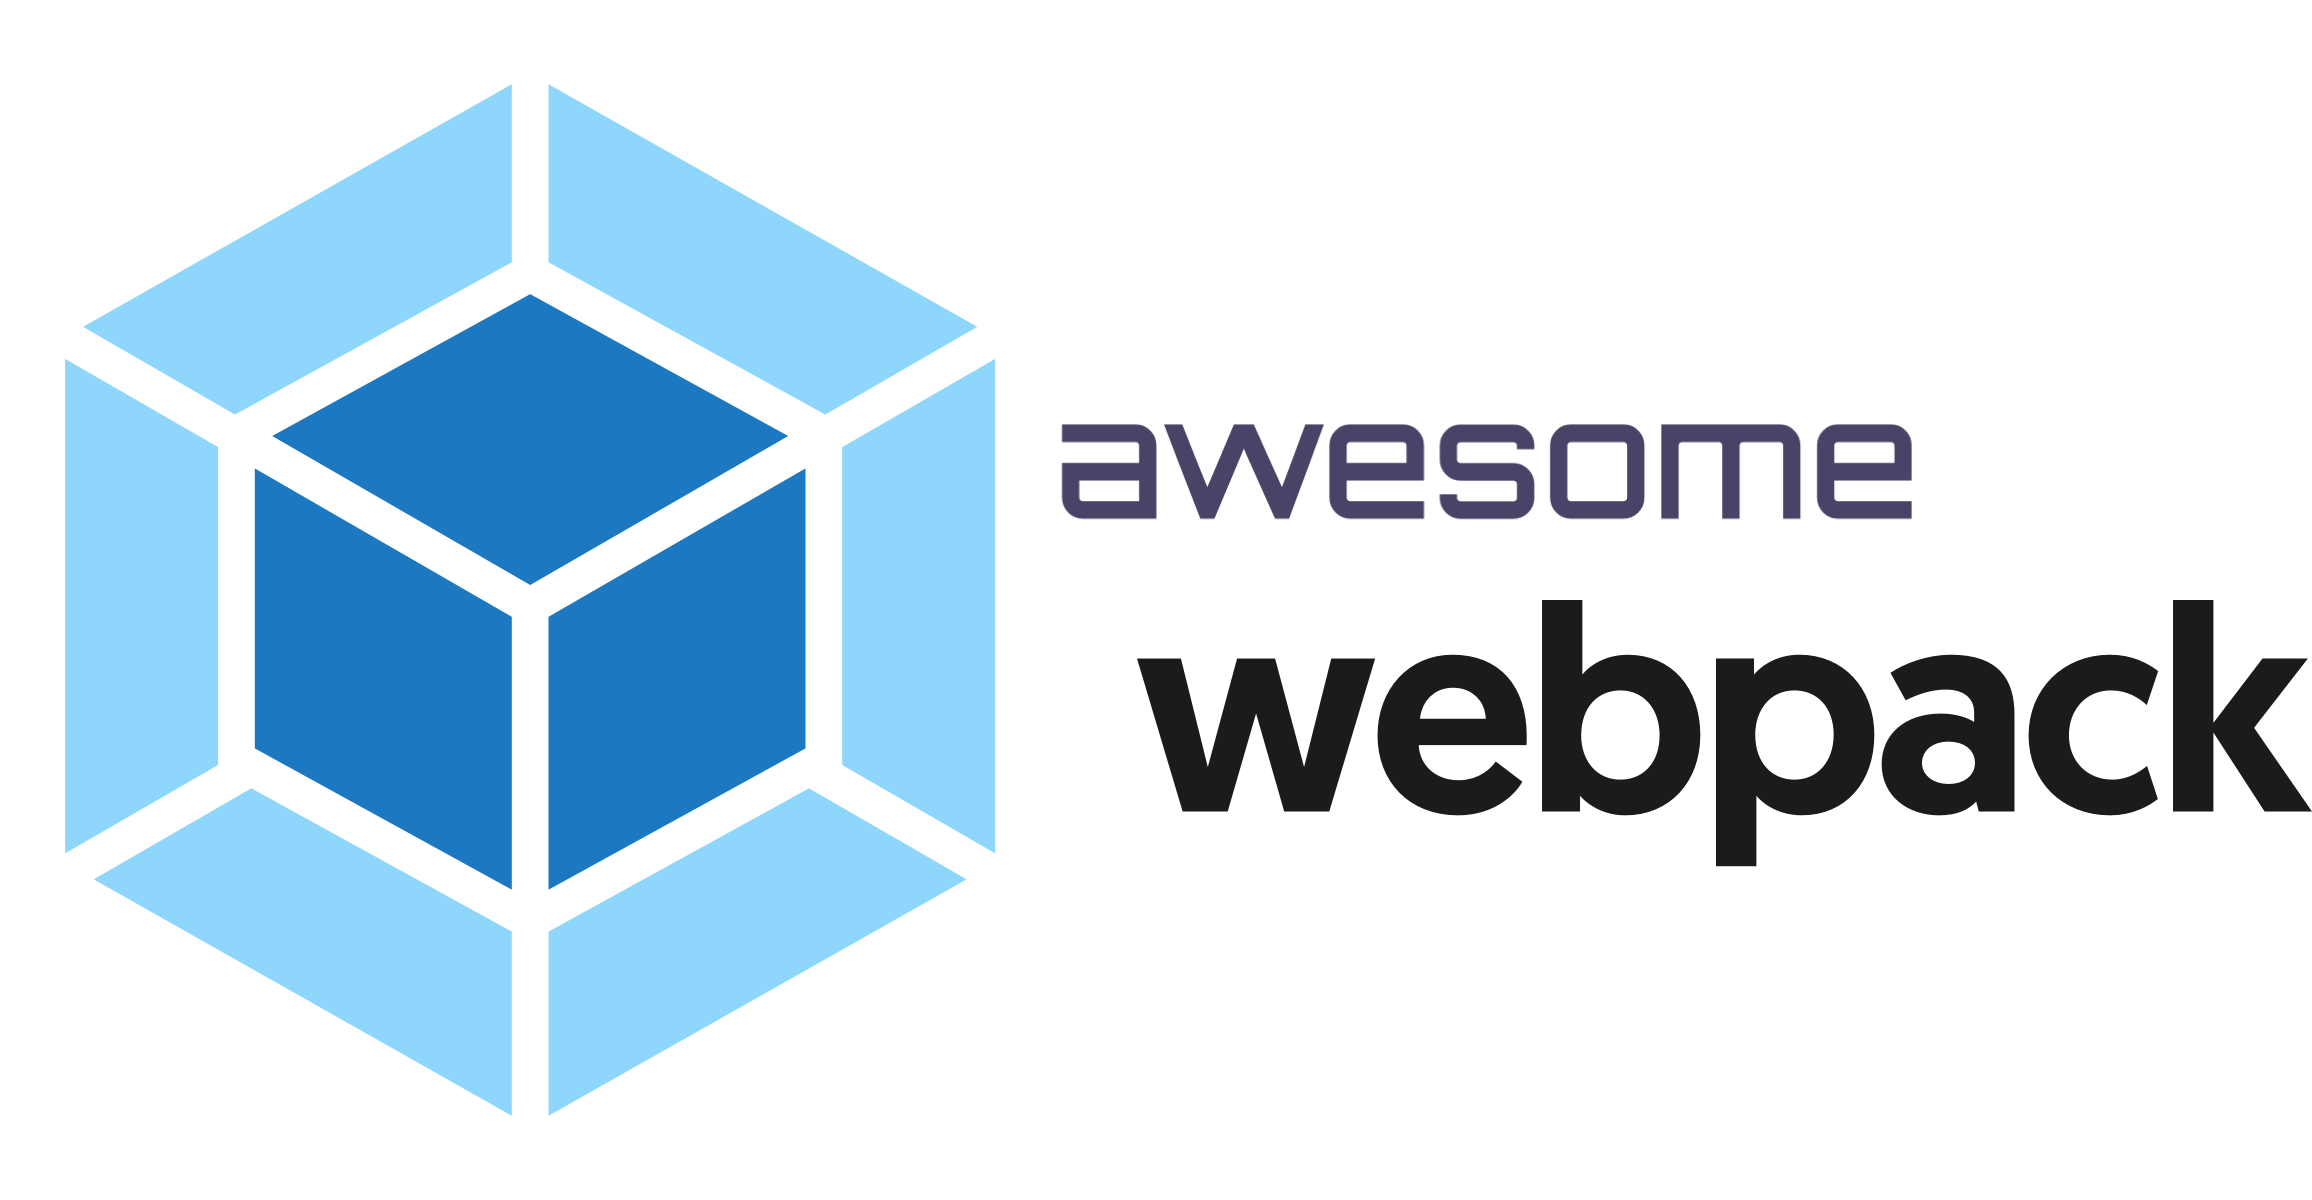 awesome-webpack